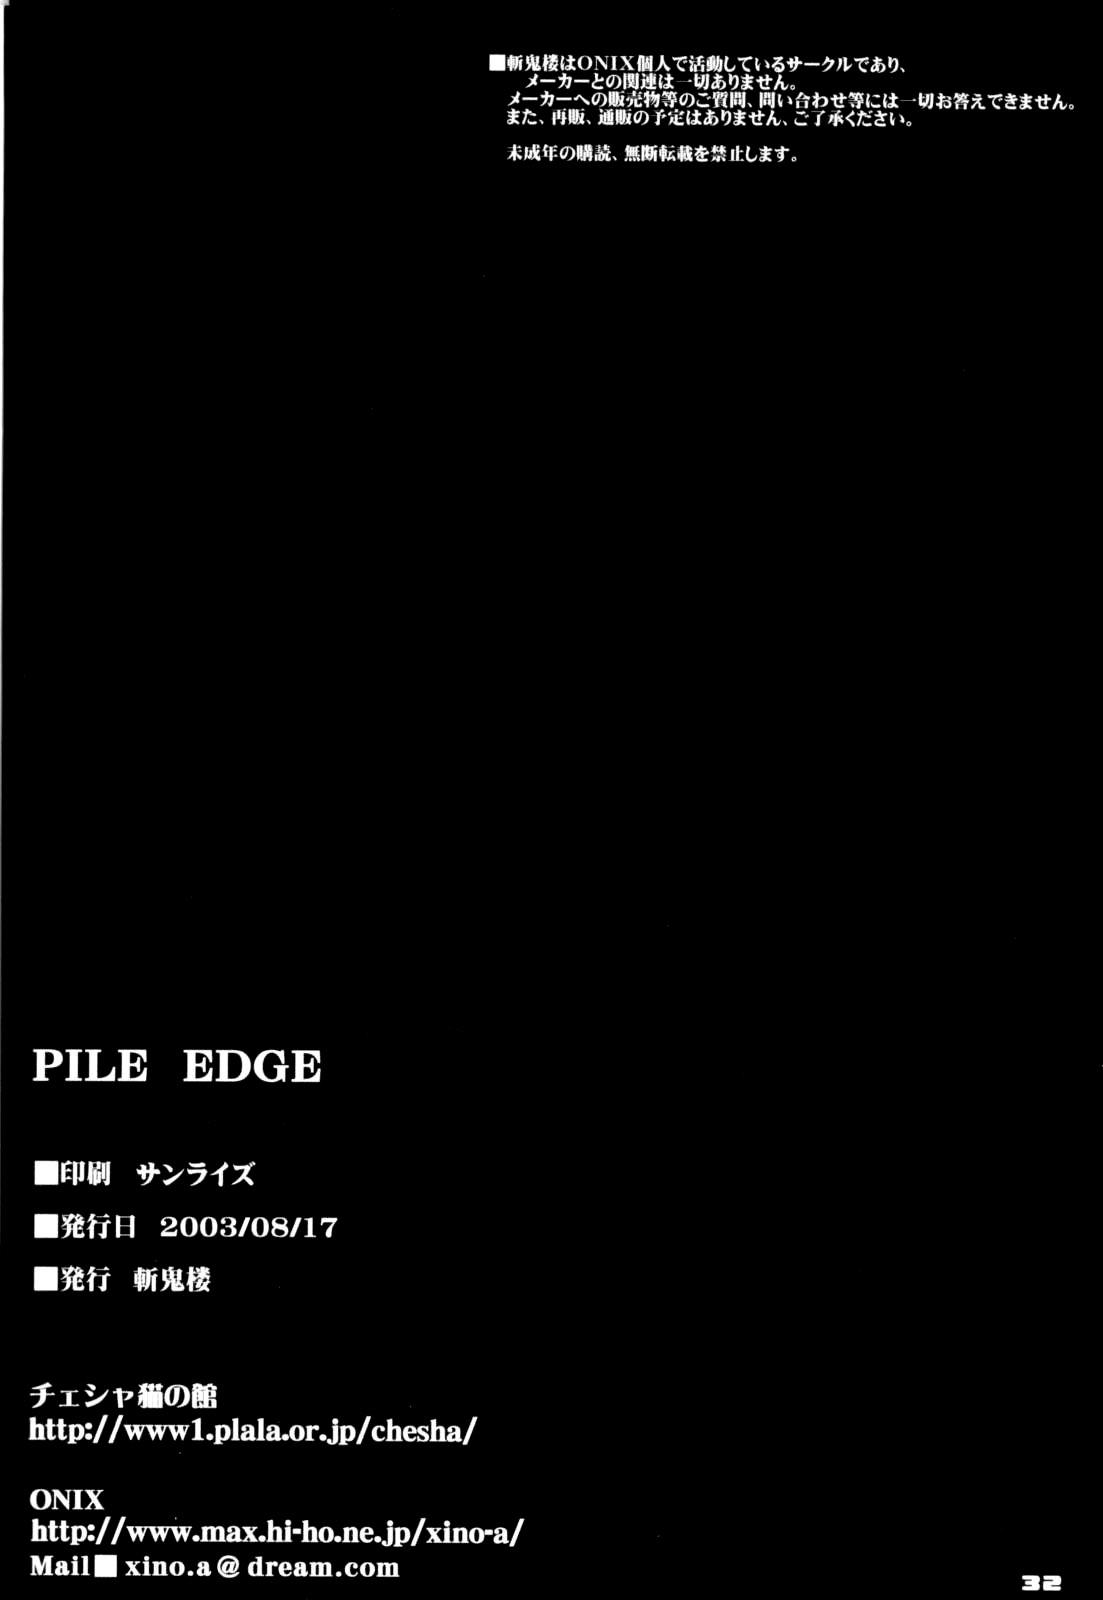 Pile Edge 2003 Summer 30